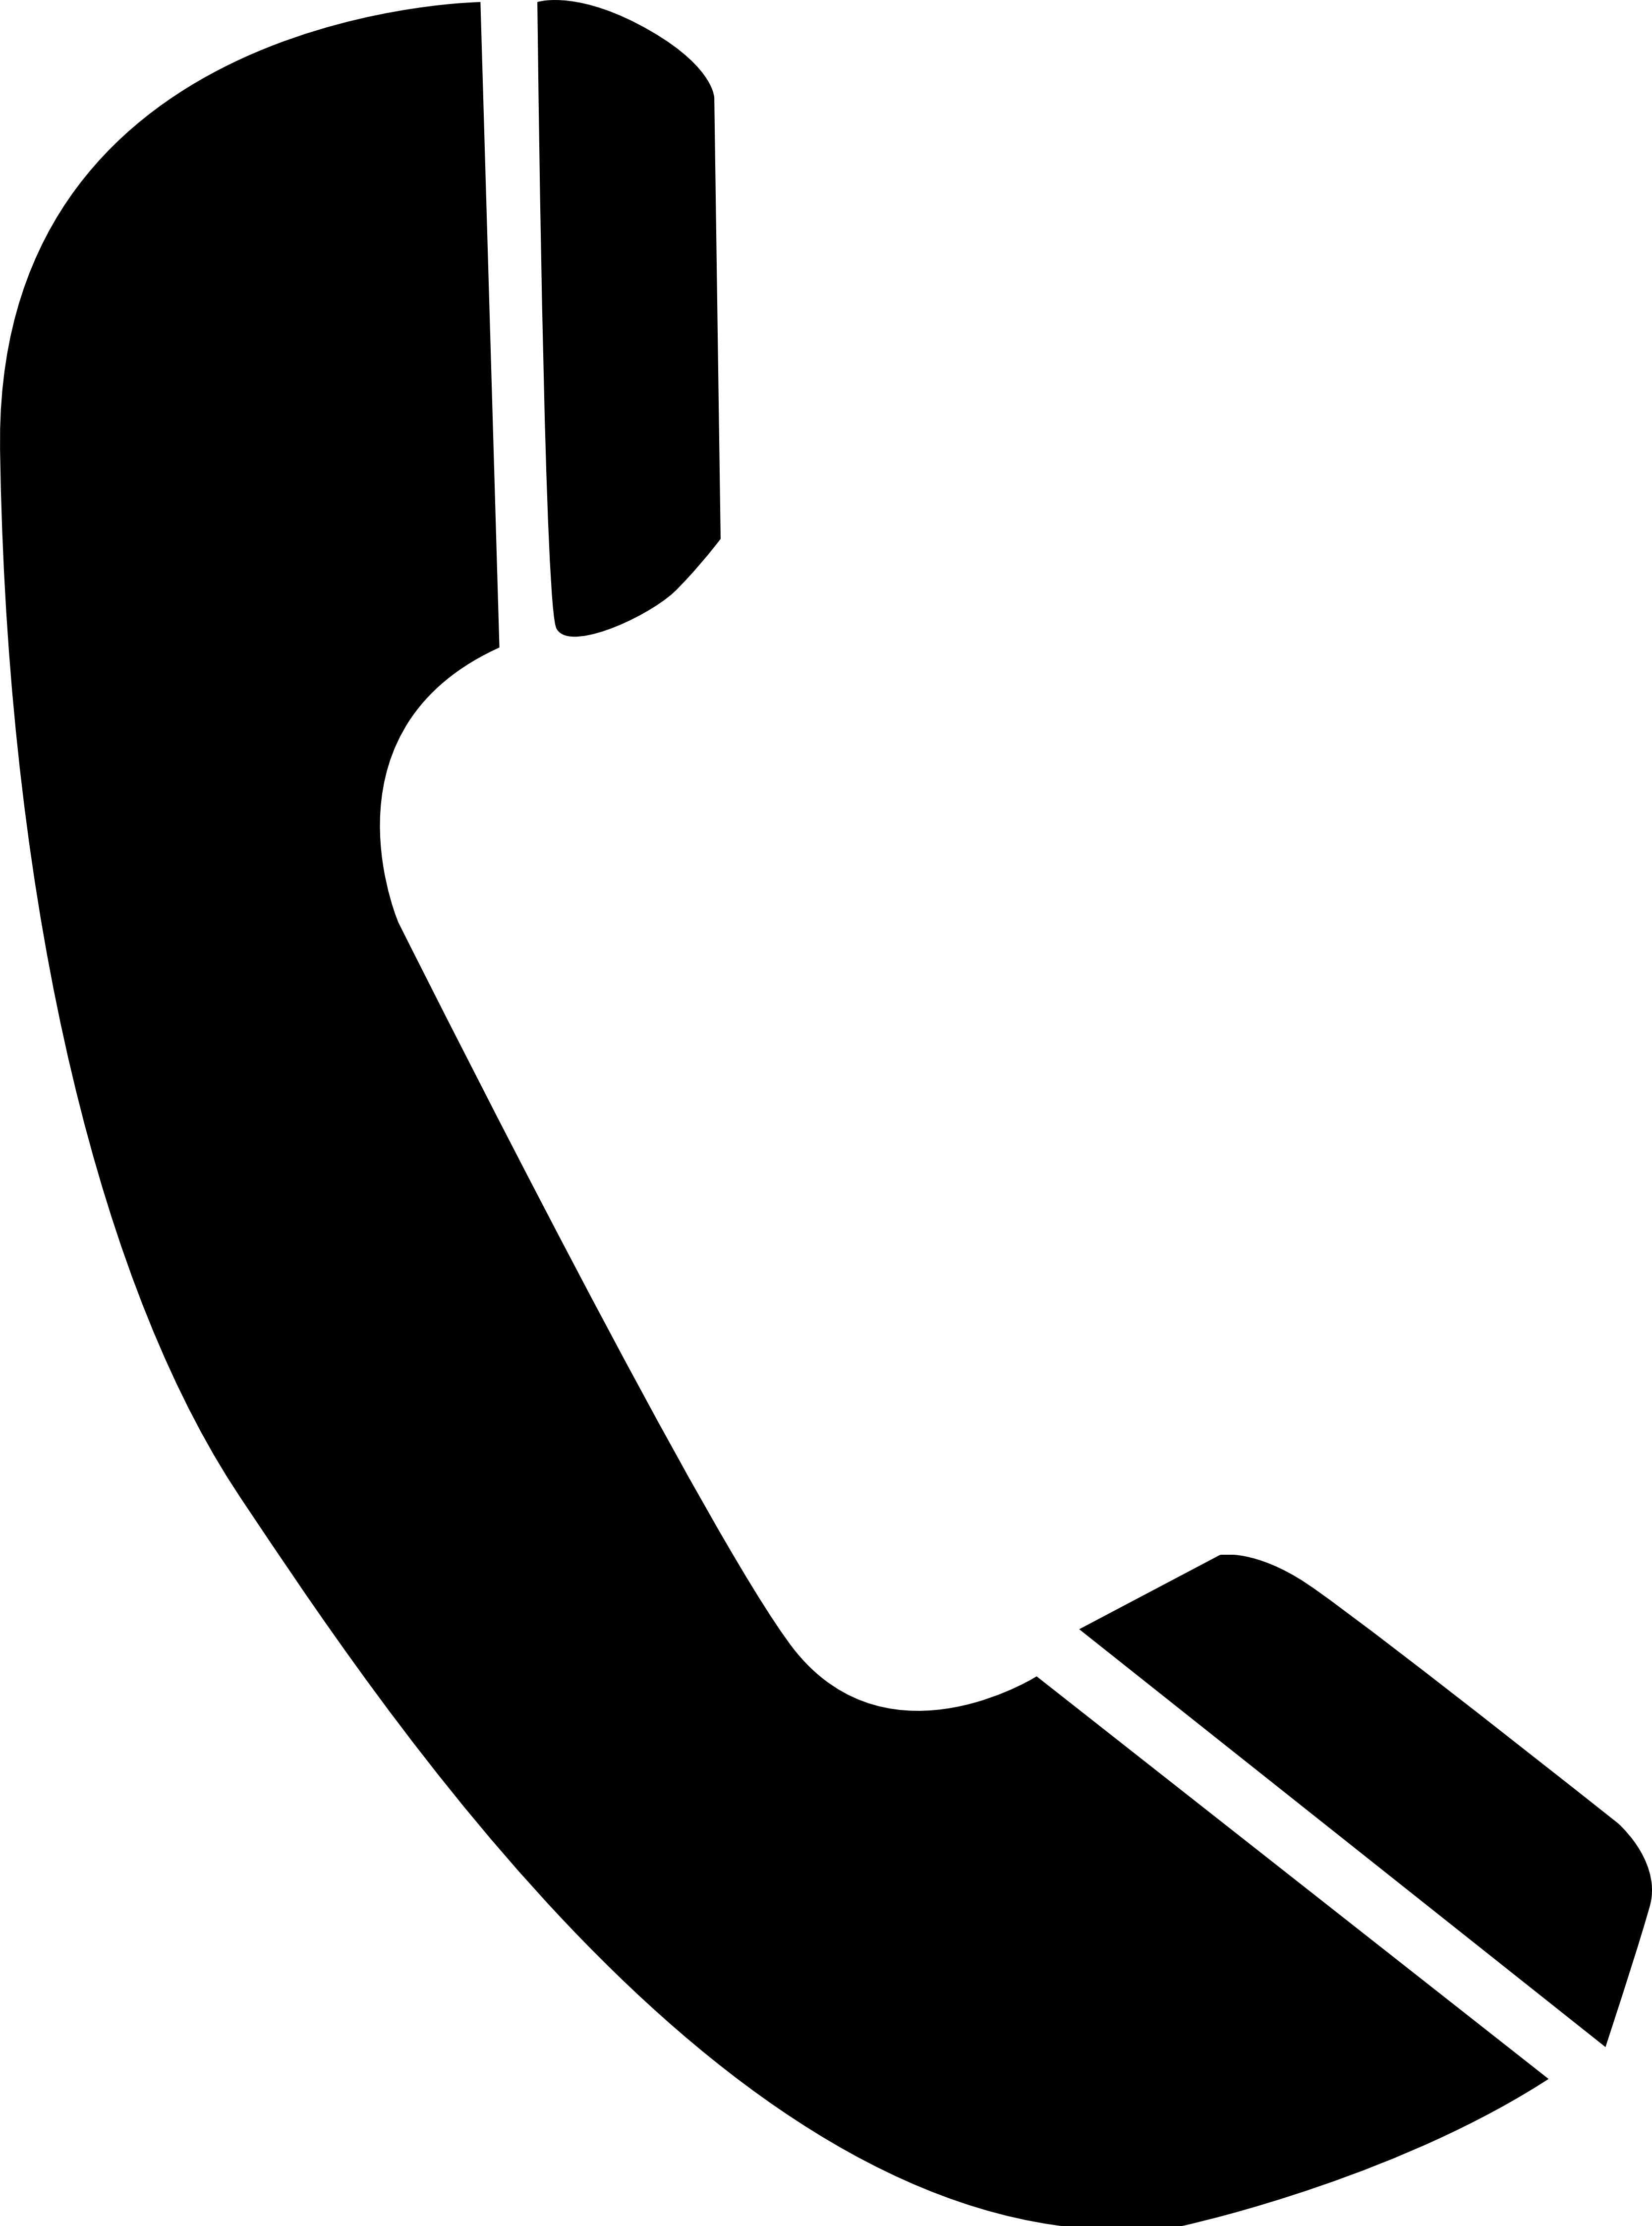 Office Telephone Logo - 20 Telephone clipart logo for free download on YA-webdesign